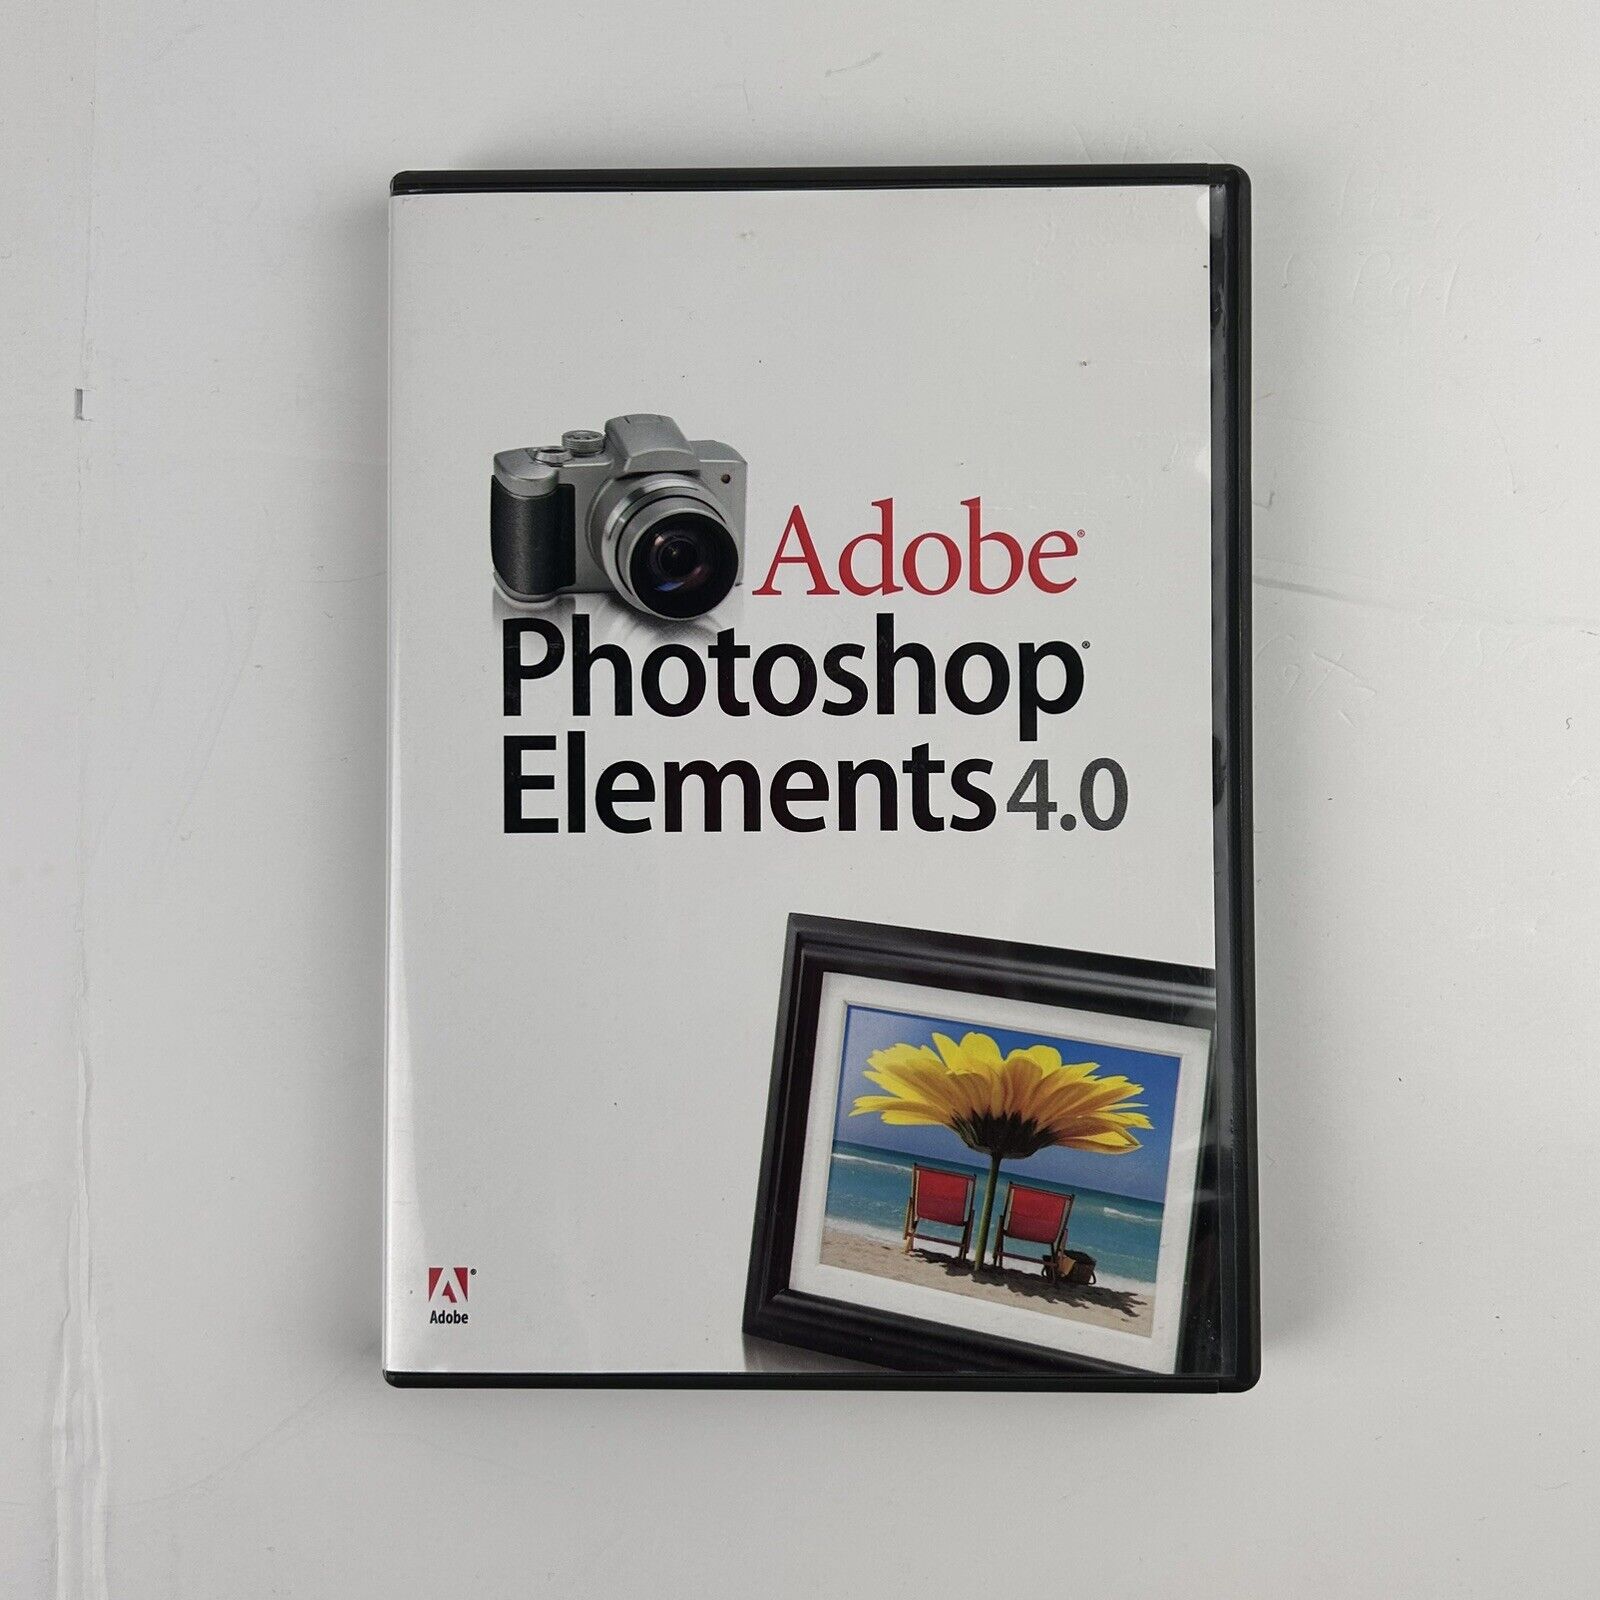 2006 Adobe Photoshop Elements 4.0 Software Apple Macintosh New open Box With Key